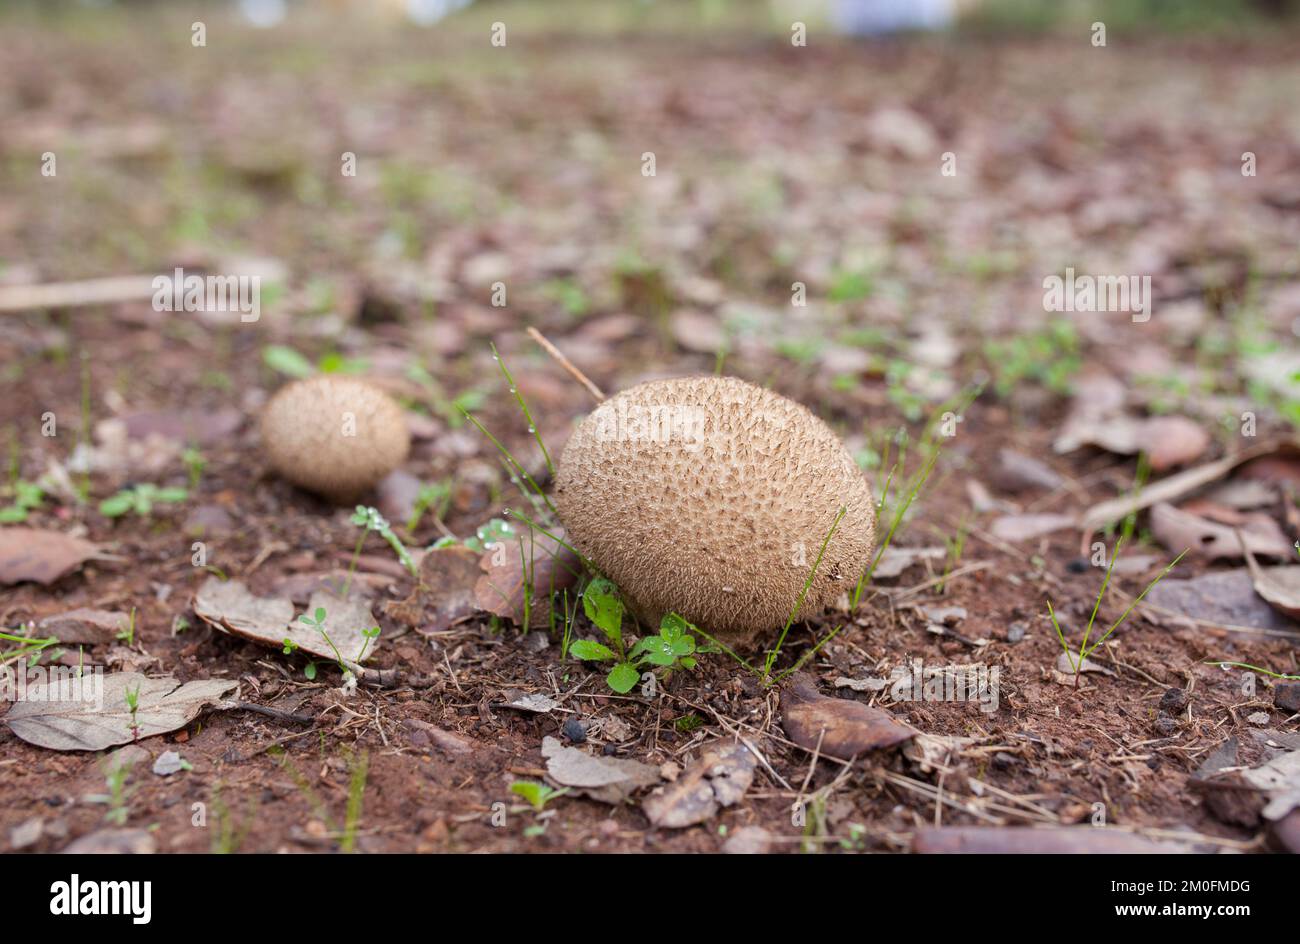 Puffball mushrooms or lycoperdon. Ground view Stock Photo